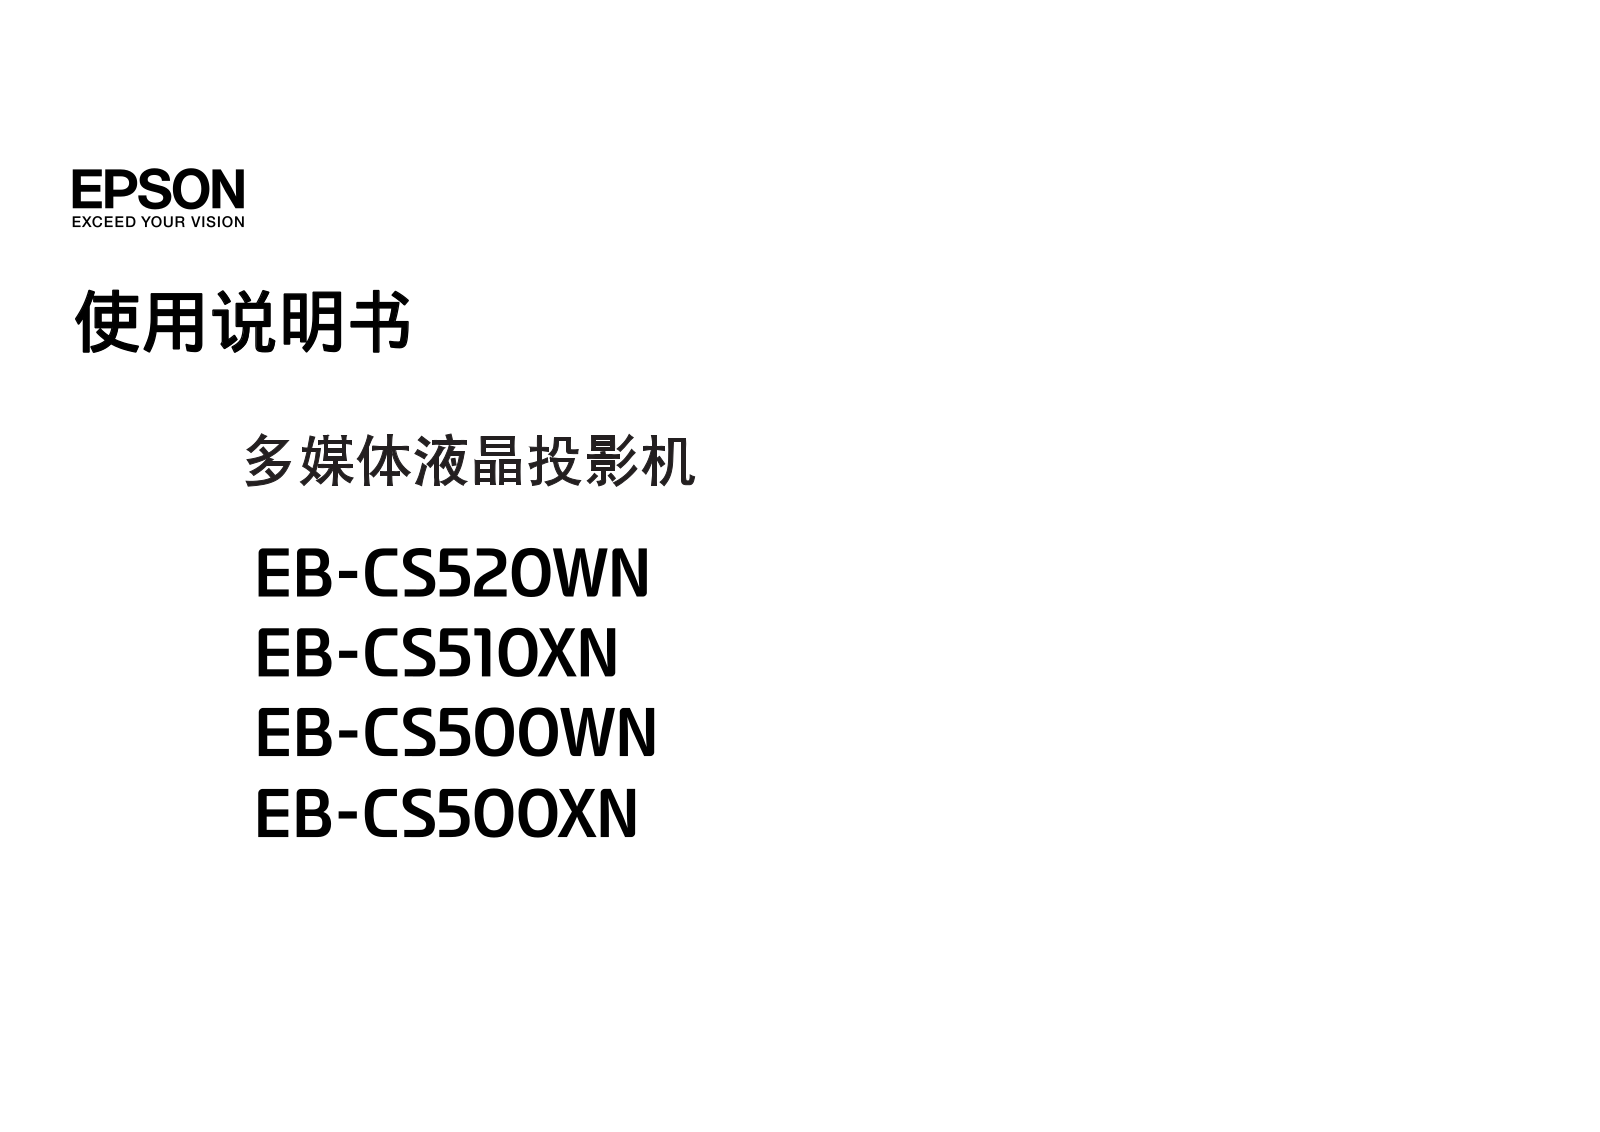 EPSON EB-CS520WN, EB-CS510XN, EB-CS500WN, EB-CS500XN service manual